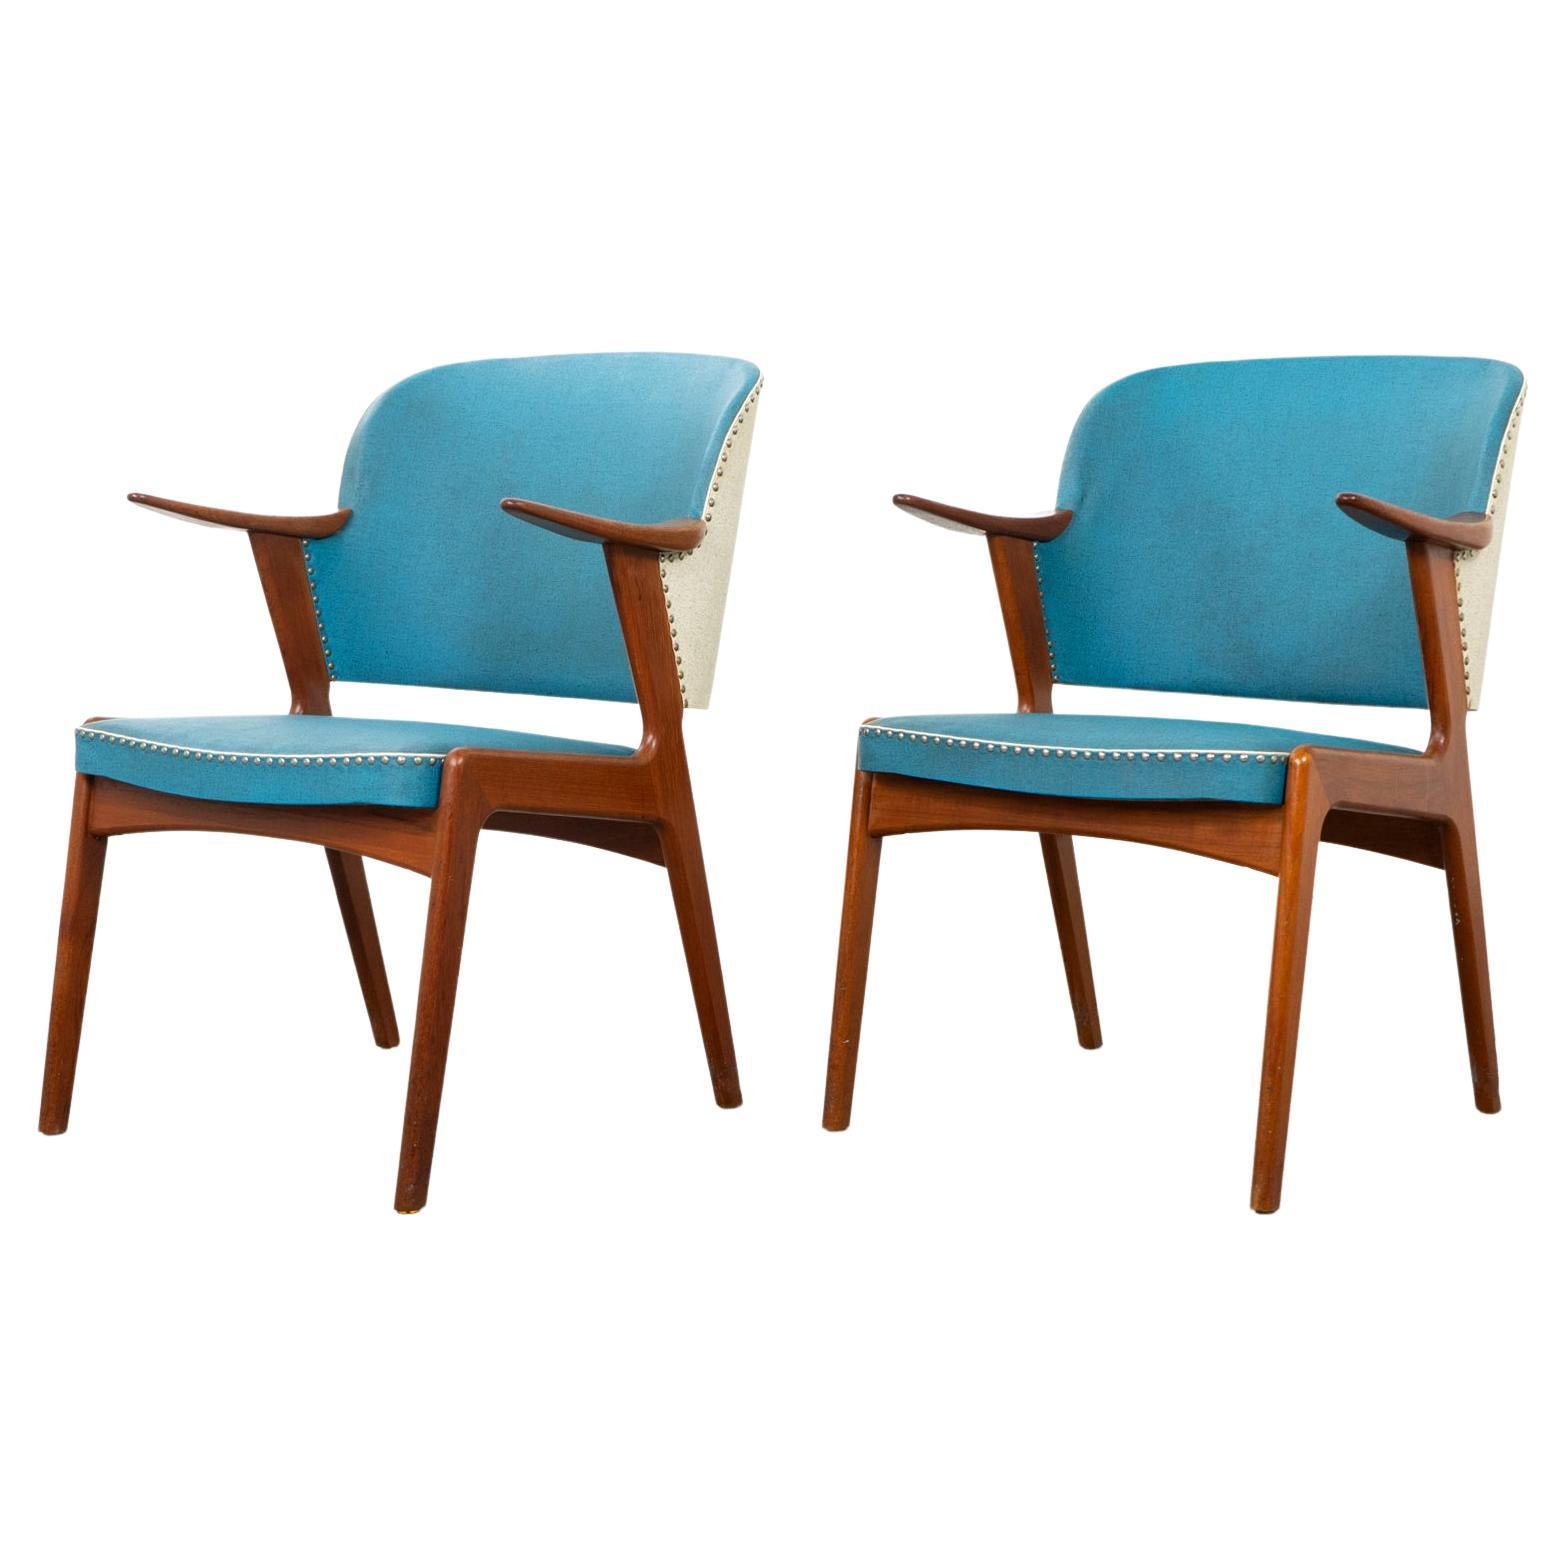 Pair of Danish Mid-Century Modern Teak & Vinyl Arm Chairs